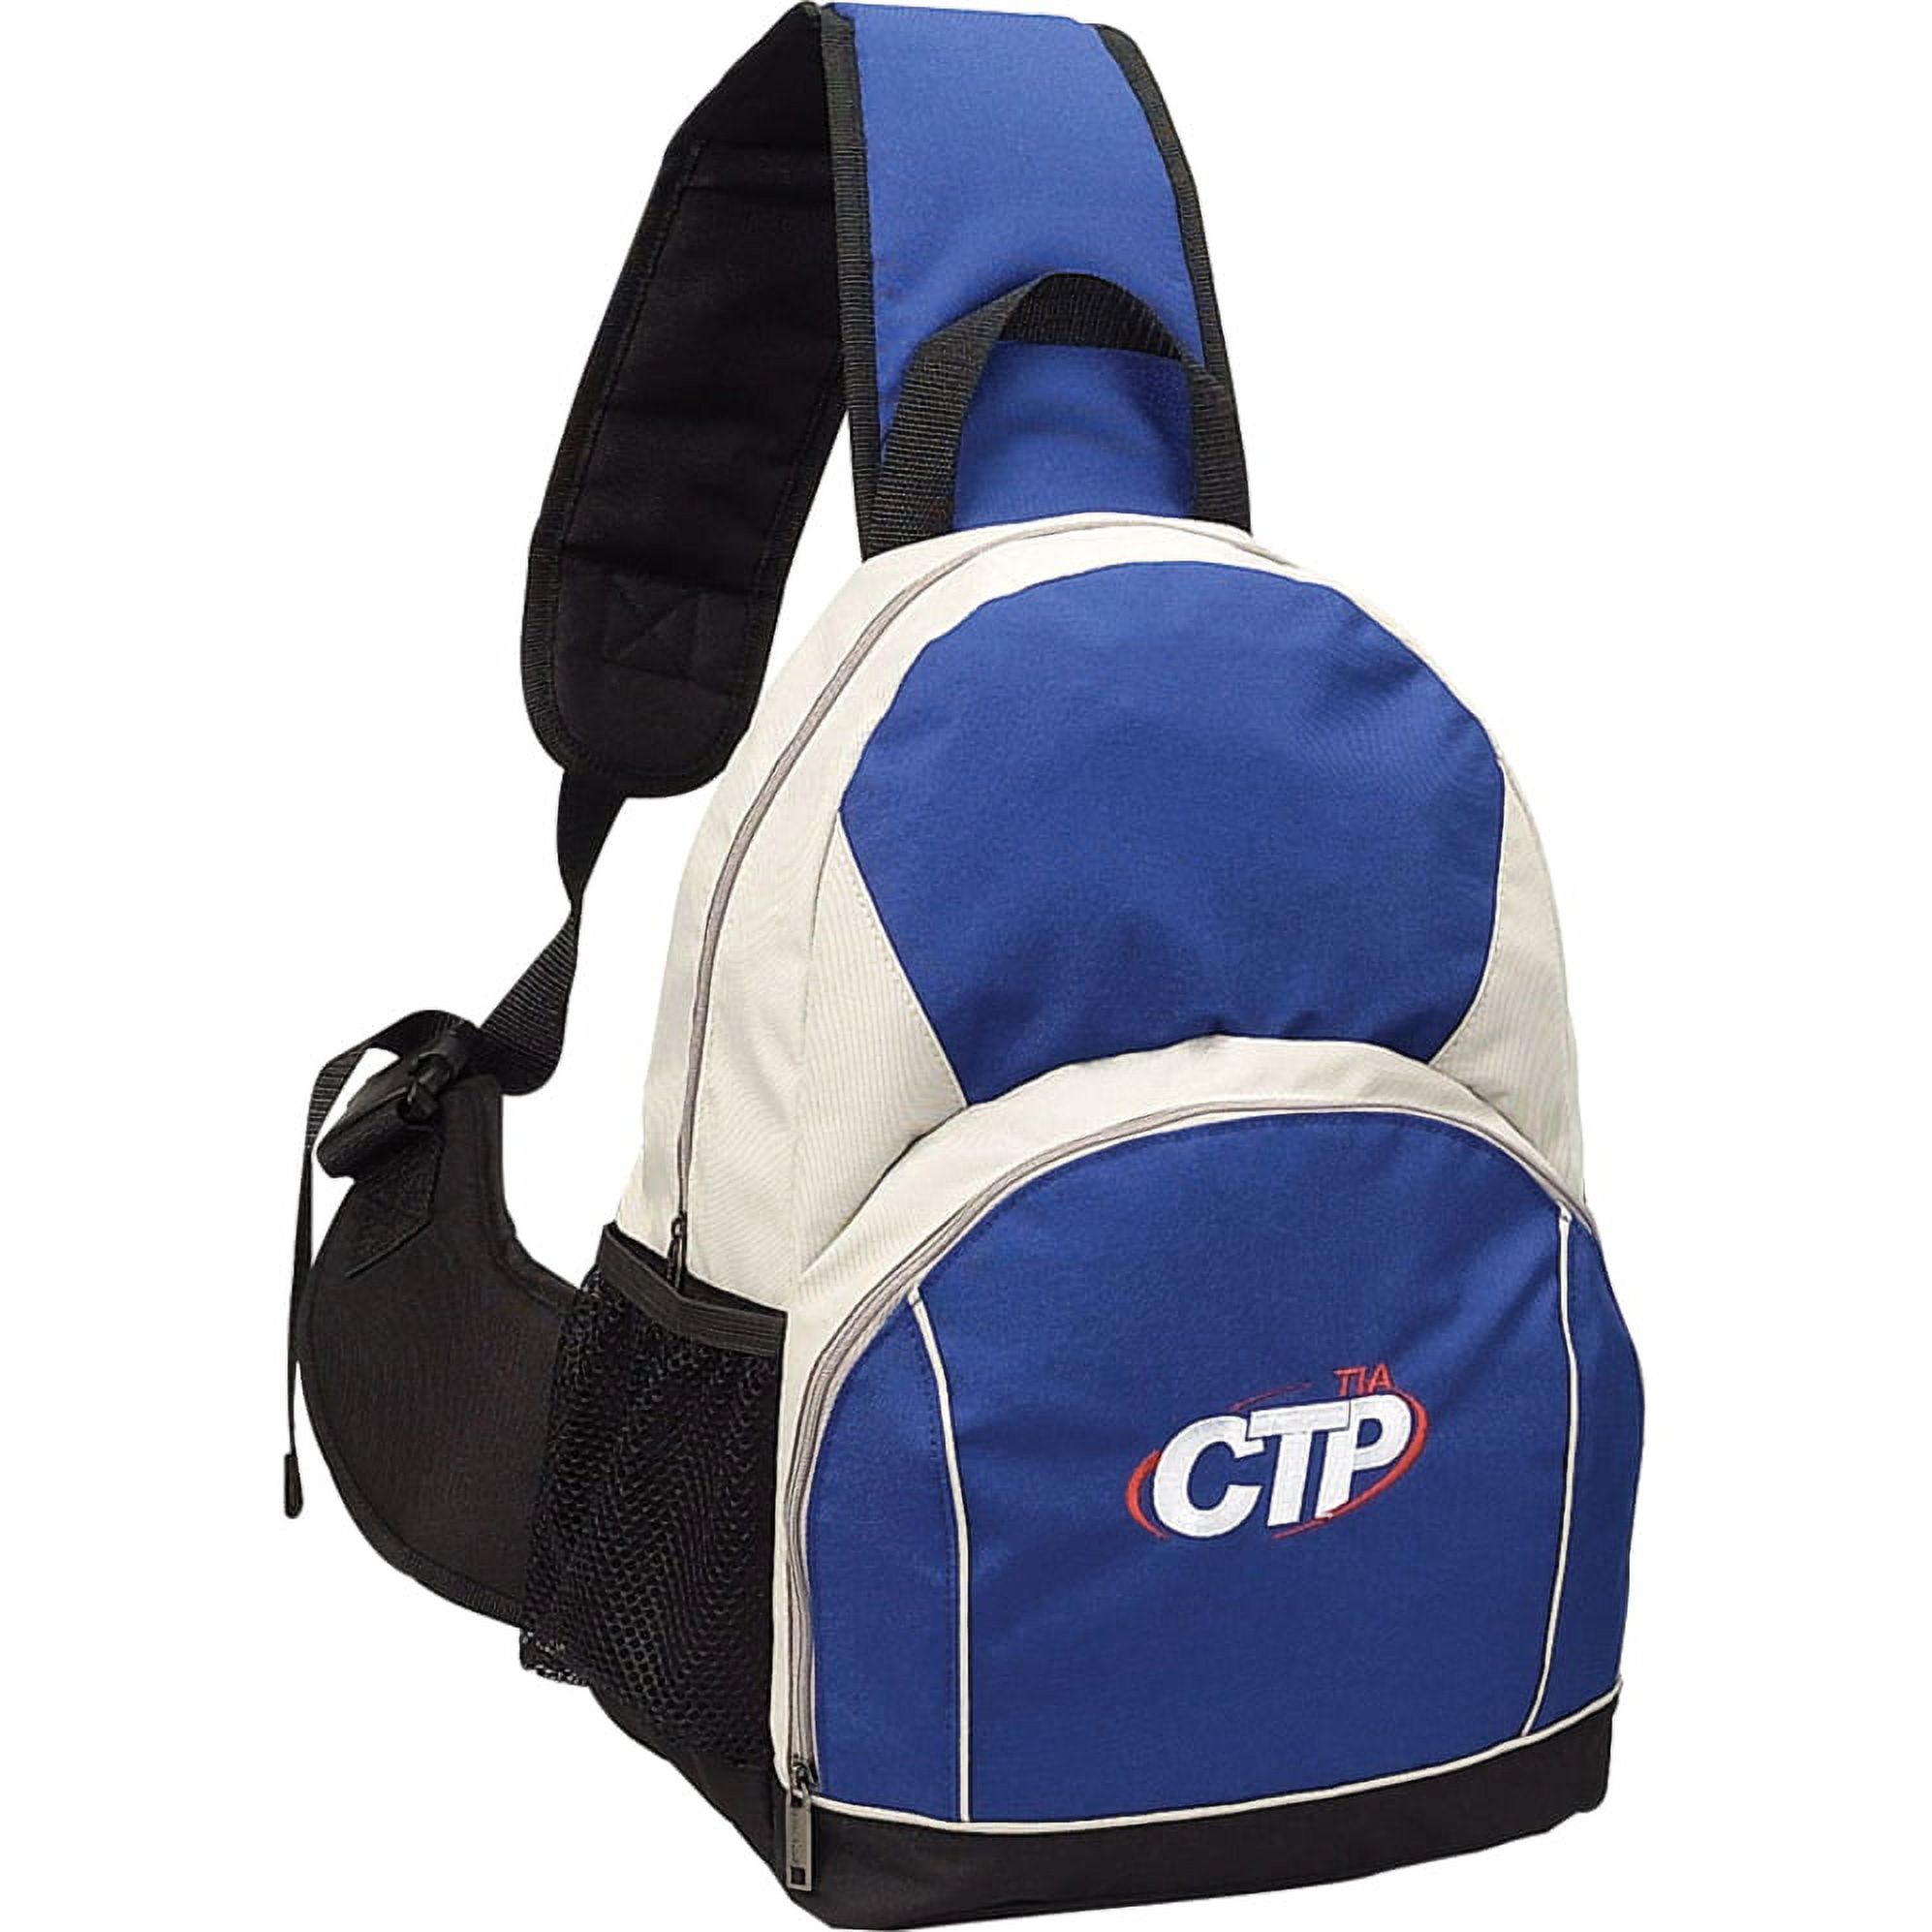 Recycled Blue Pet Sling Bag Backpack - image 1 of 2